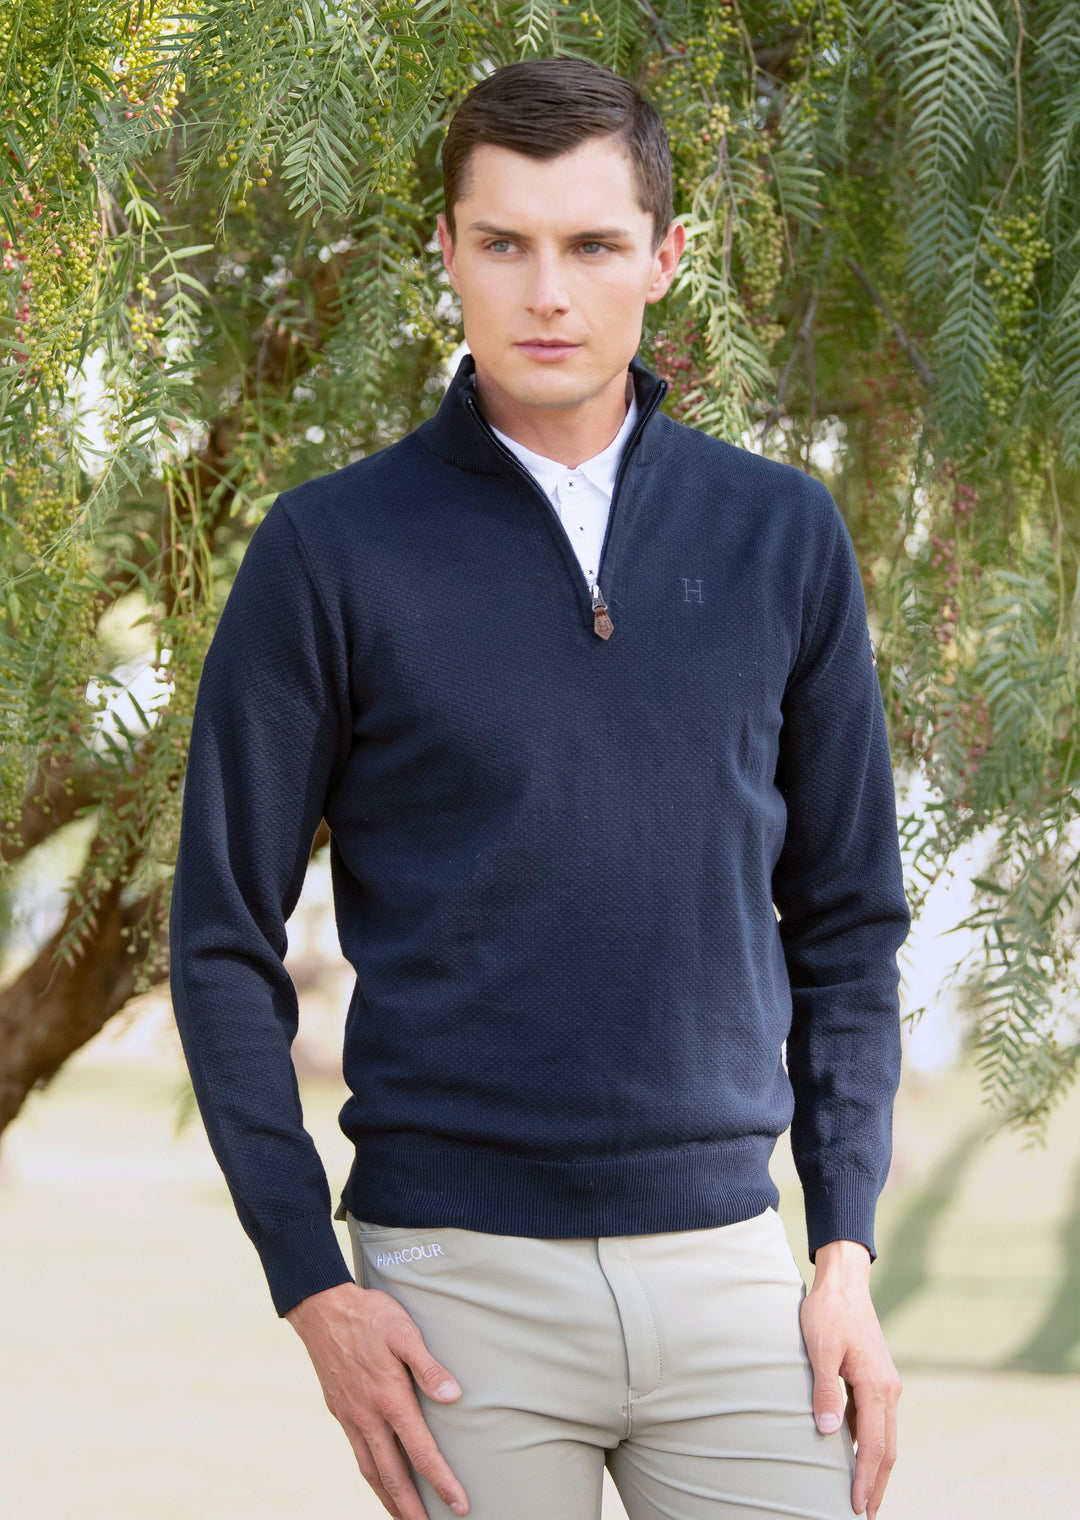 Douglas Unisex Pullover Sweater